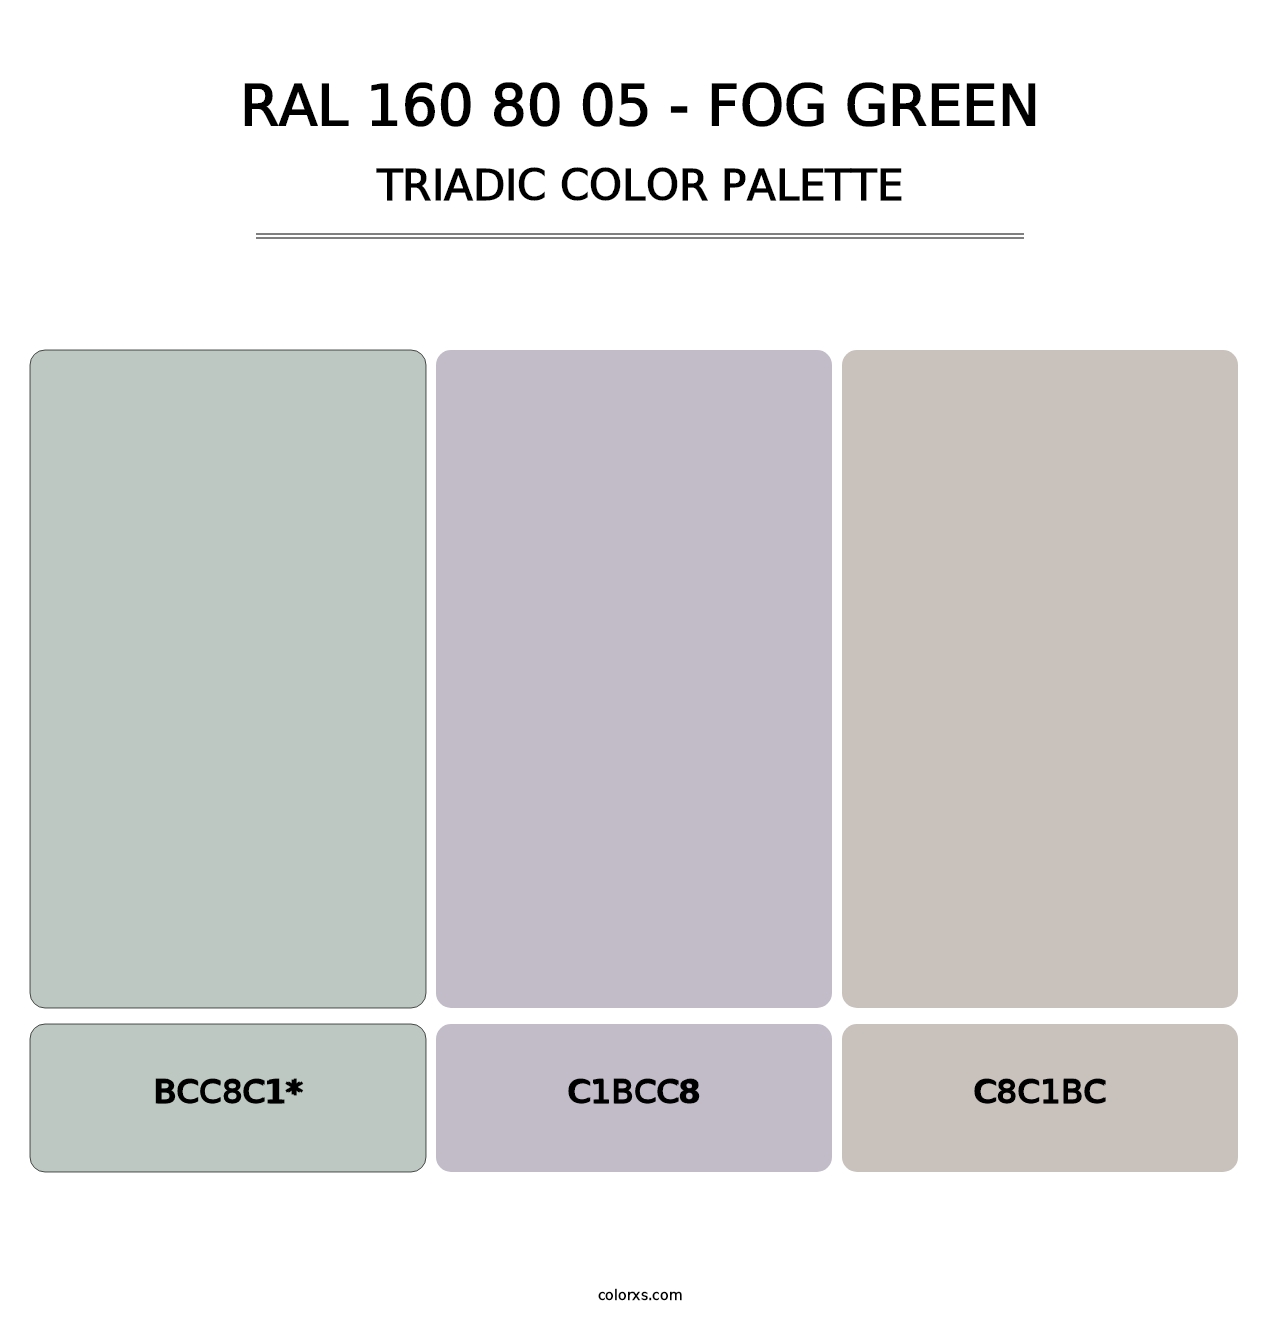 RAL 160 80 05 - Fog Green - Triadic Color Palette